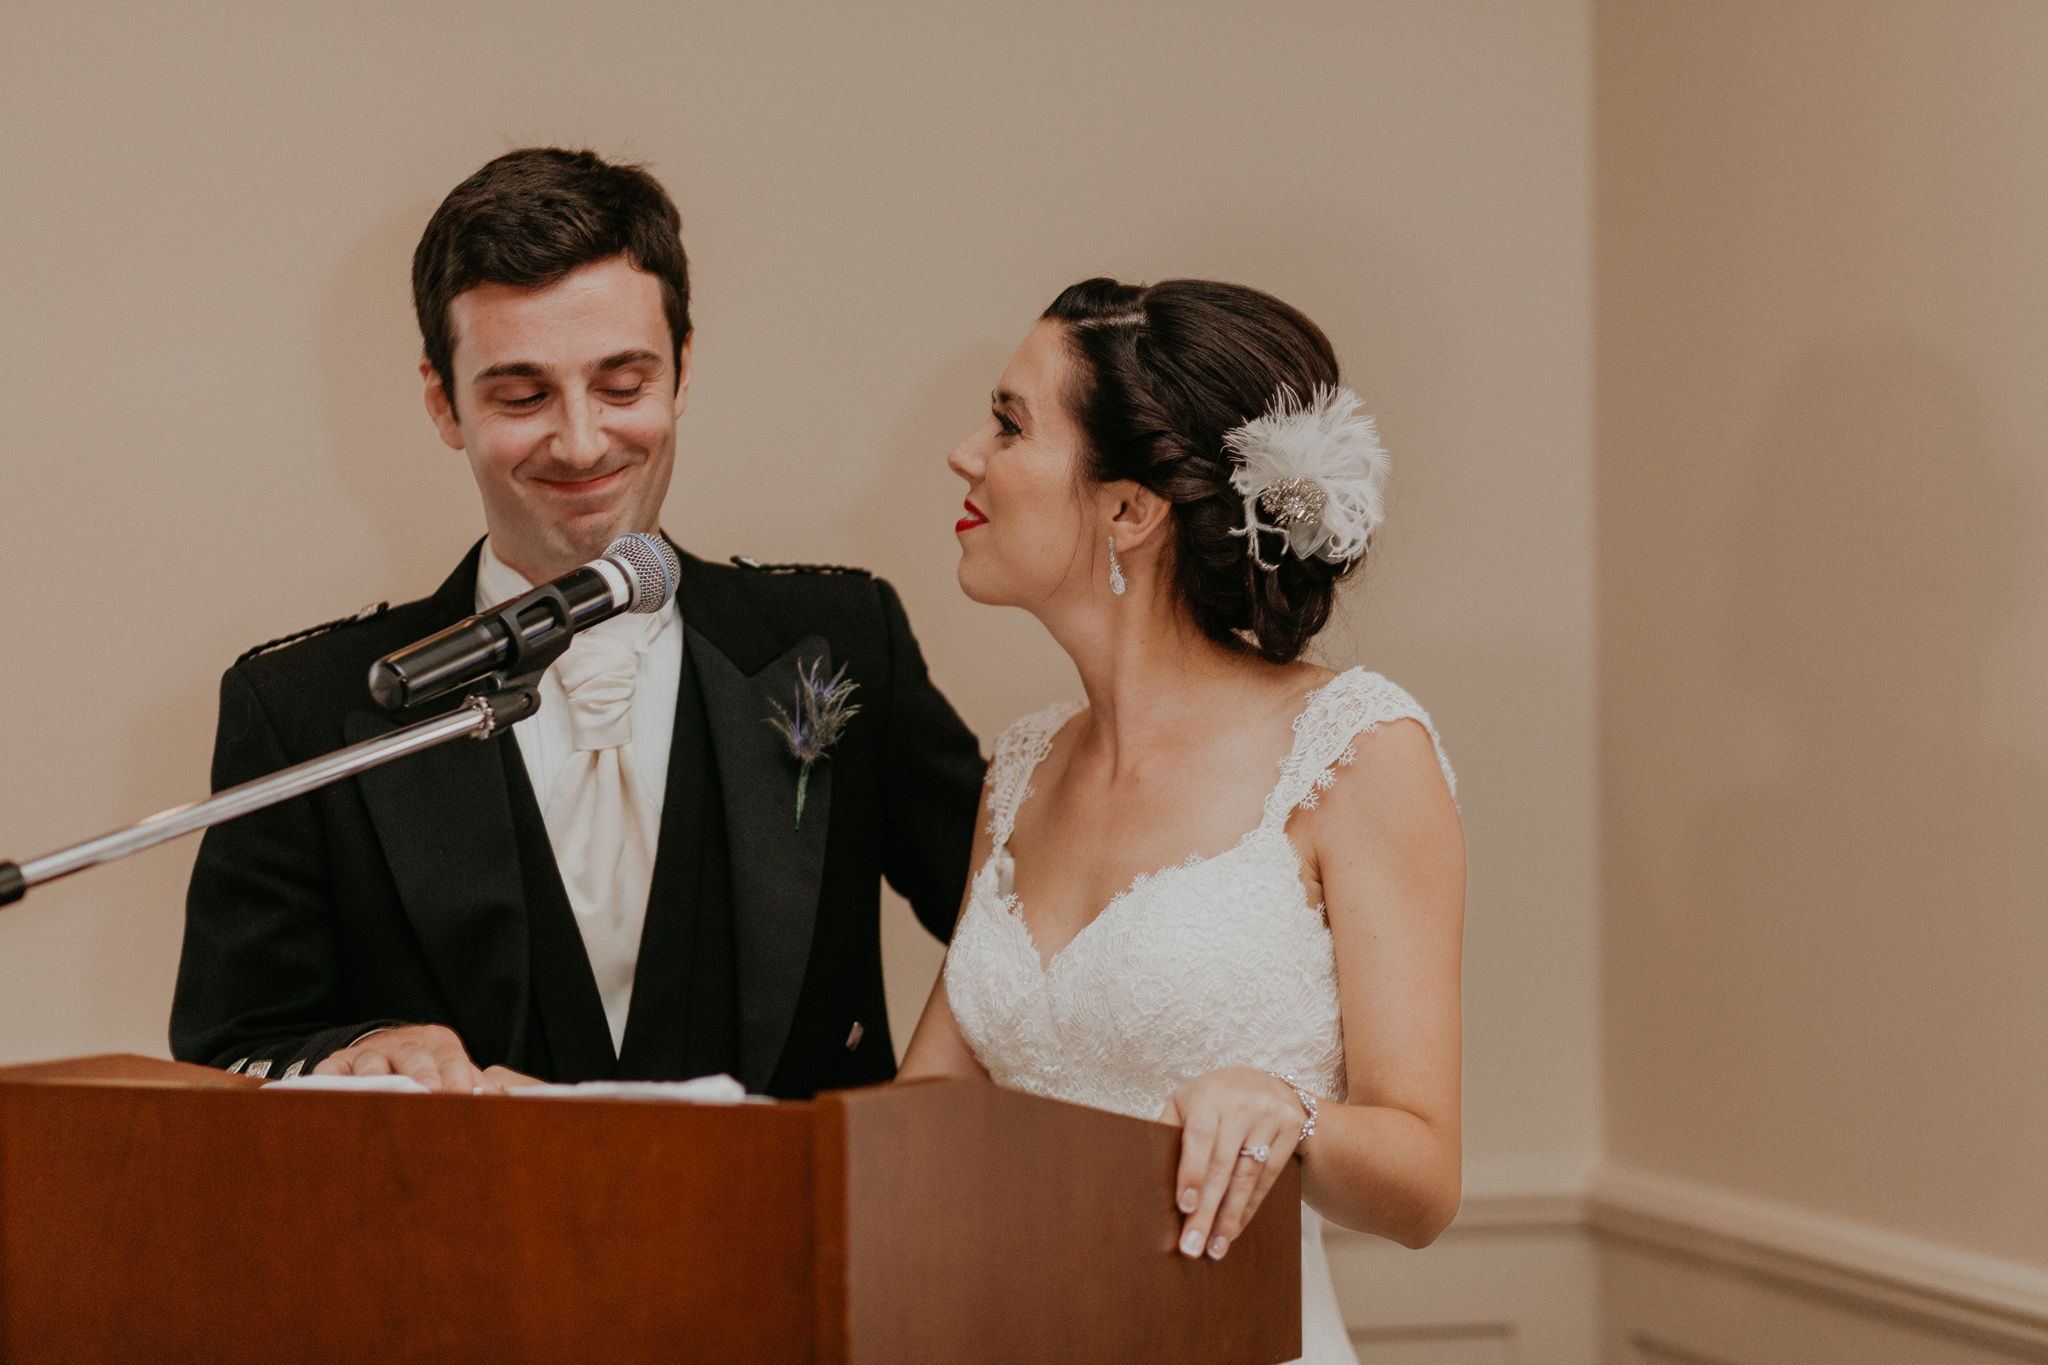 Bride and groom make toast at wedding reception